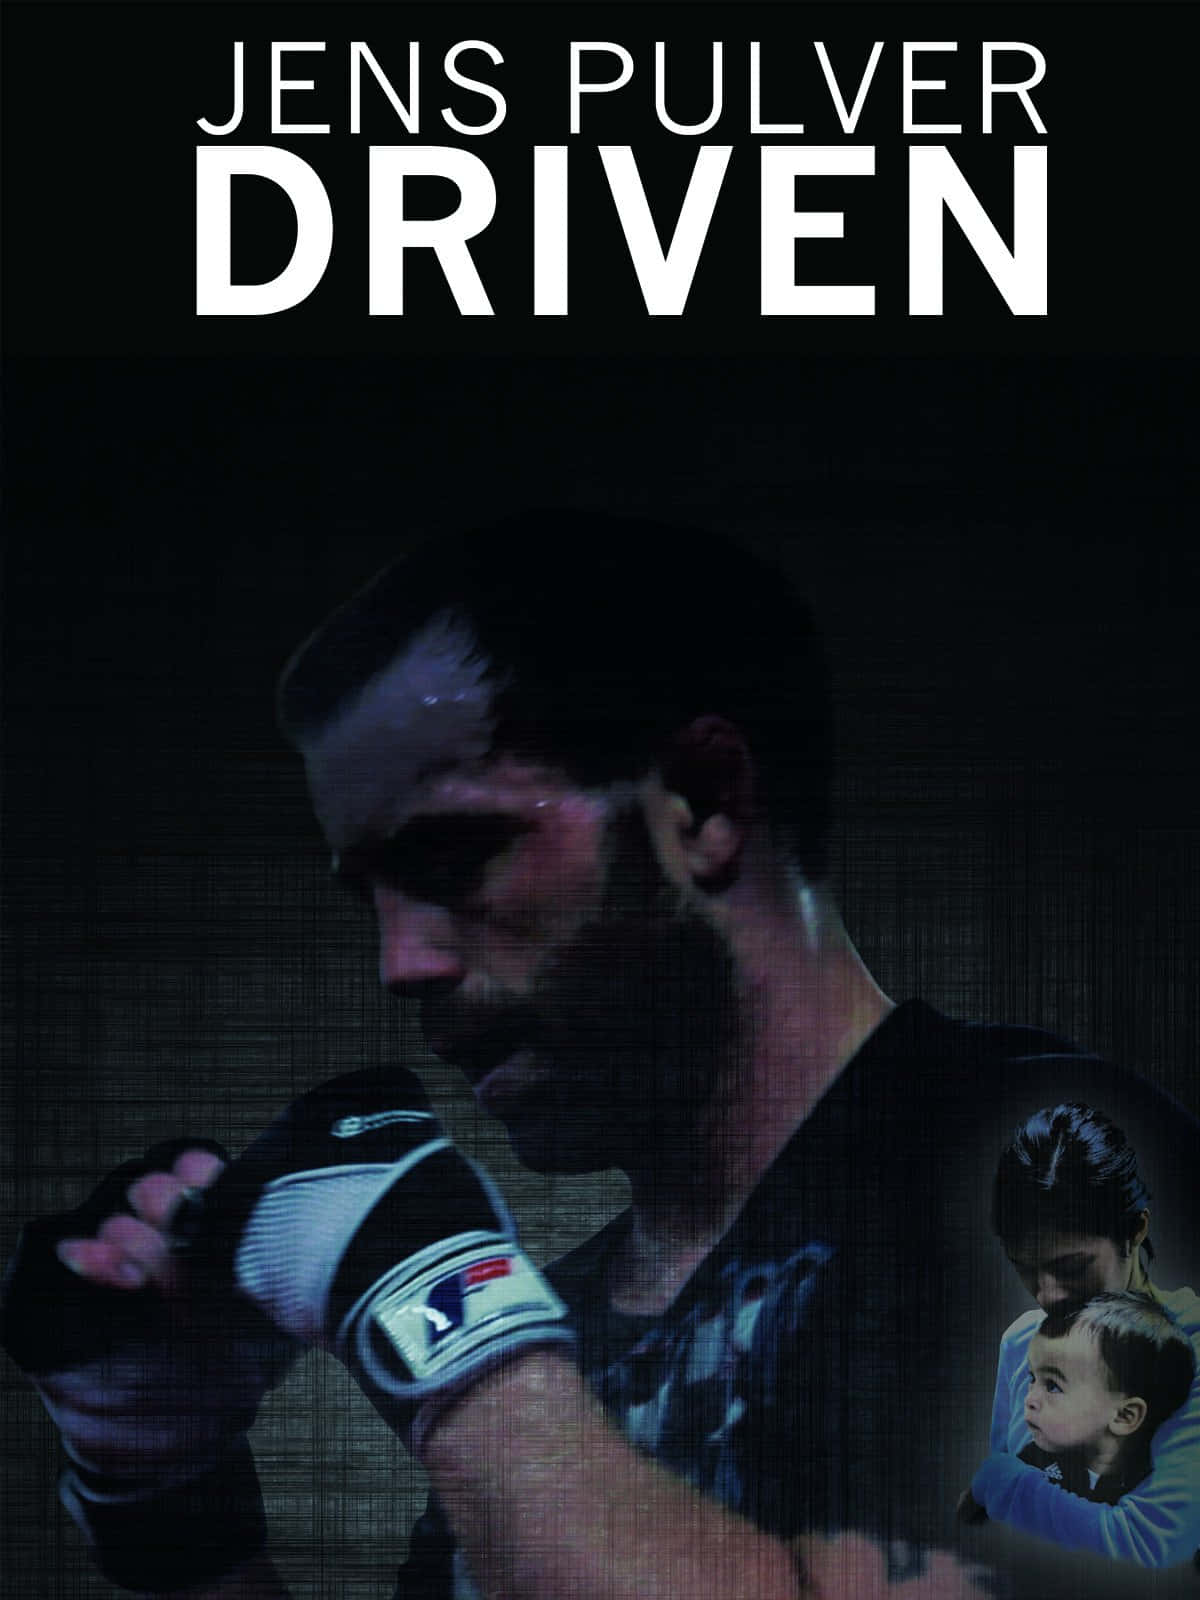 MMA Fighter Jens Pulver Poster Wallpaper